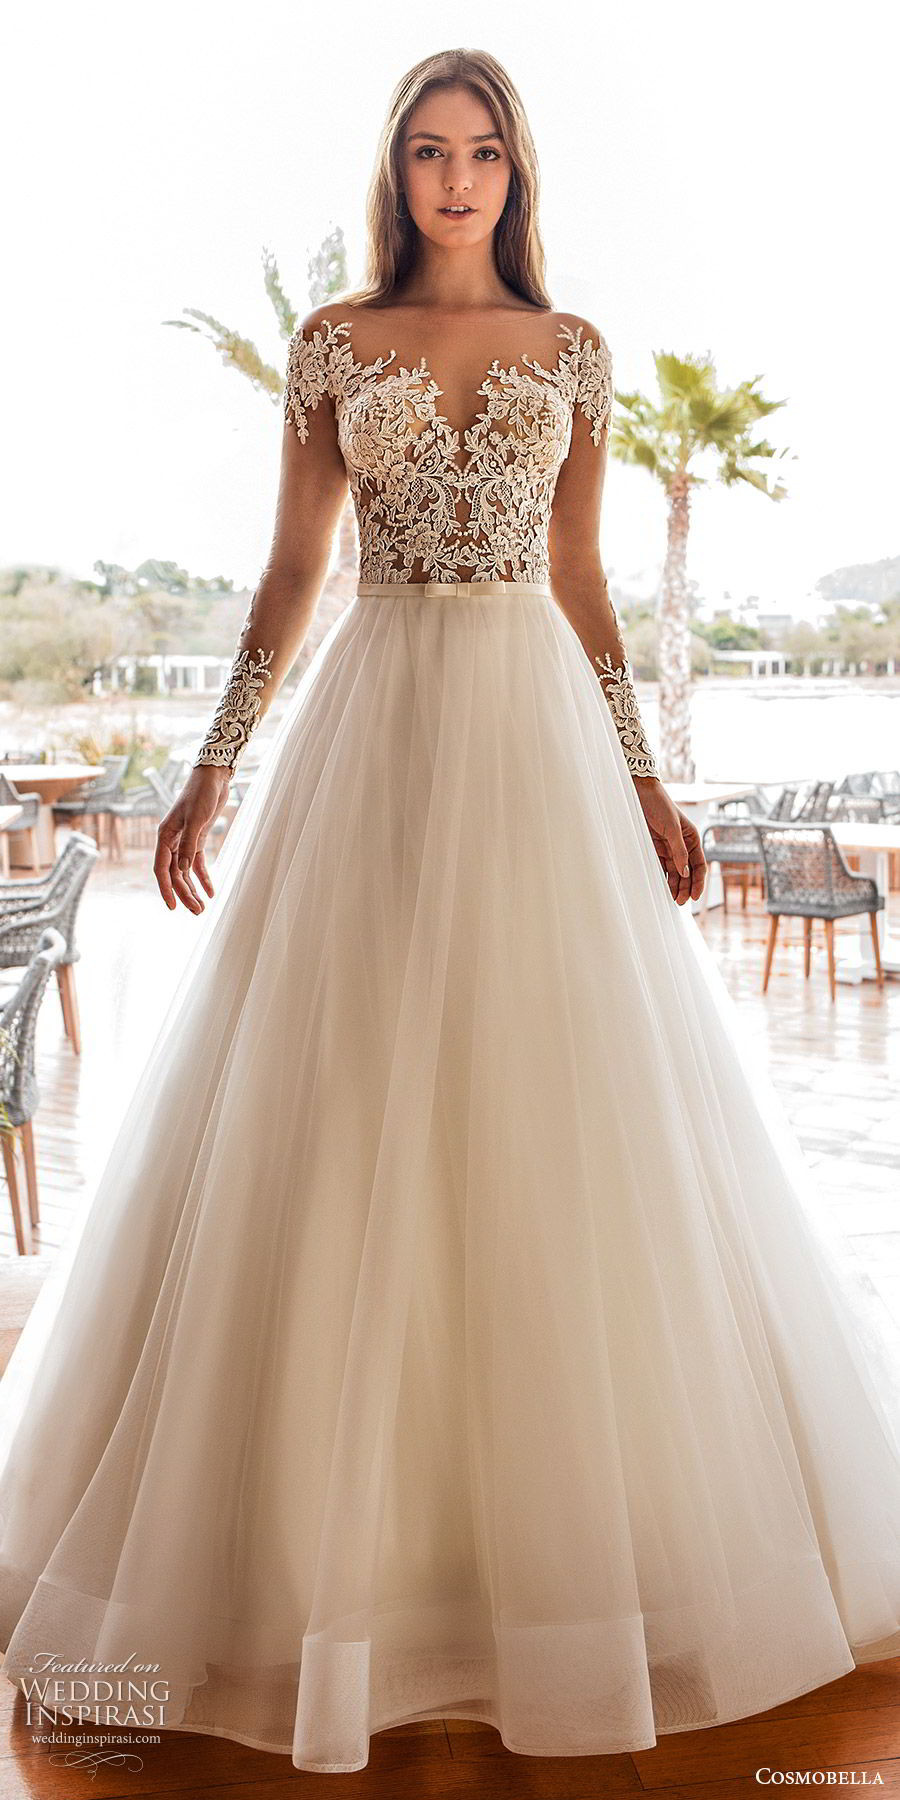 Best Wedding Dresses 2020
 Cosmobella 2020 Wedding Dresses — “Eterea Eleganza” Bridal